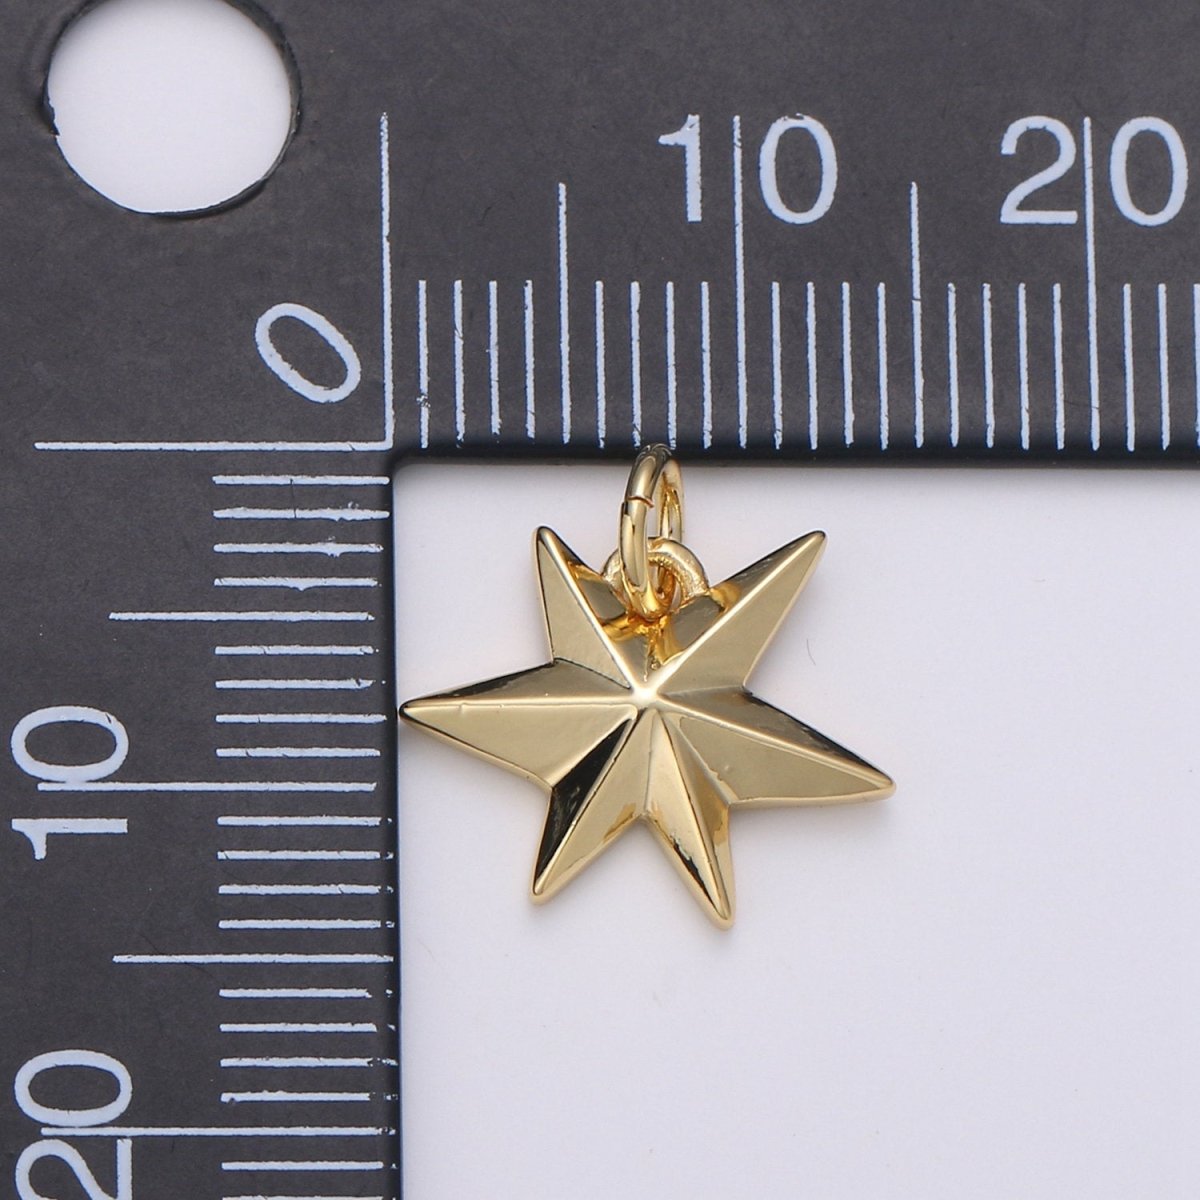 14k Gold Filled Star Pendant Starburst Charm 15mm Celestial Jewelry Making Supply D-590 - DLUXCA